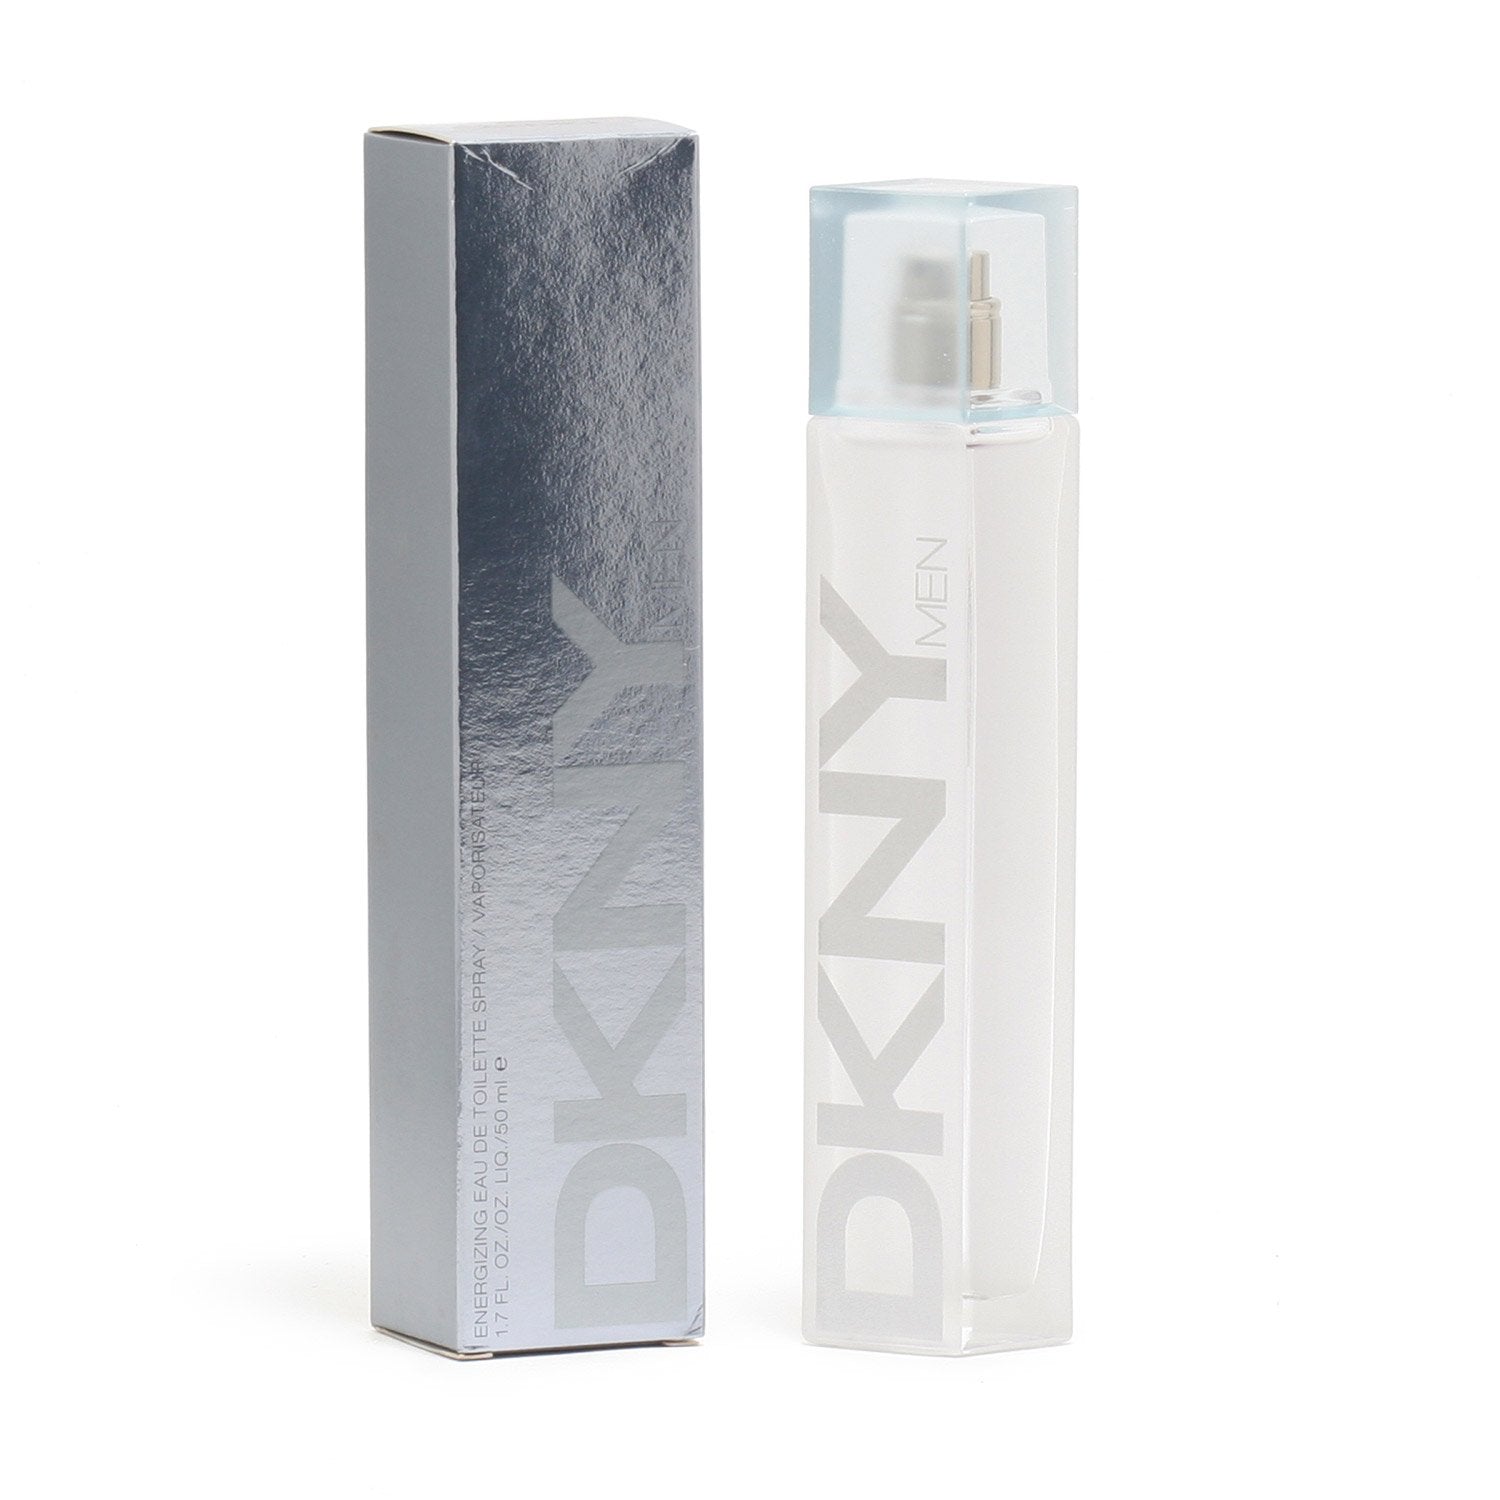 DKNY Men by Donna Karan for Men 3.4 oz Eau de Toilette Spray, Brand New  883991379306